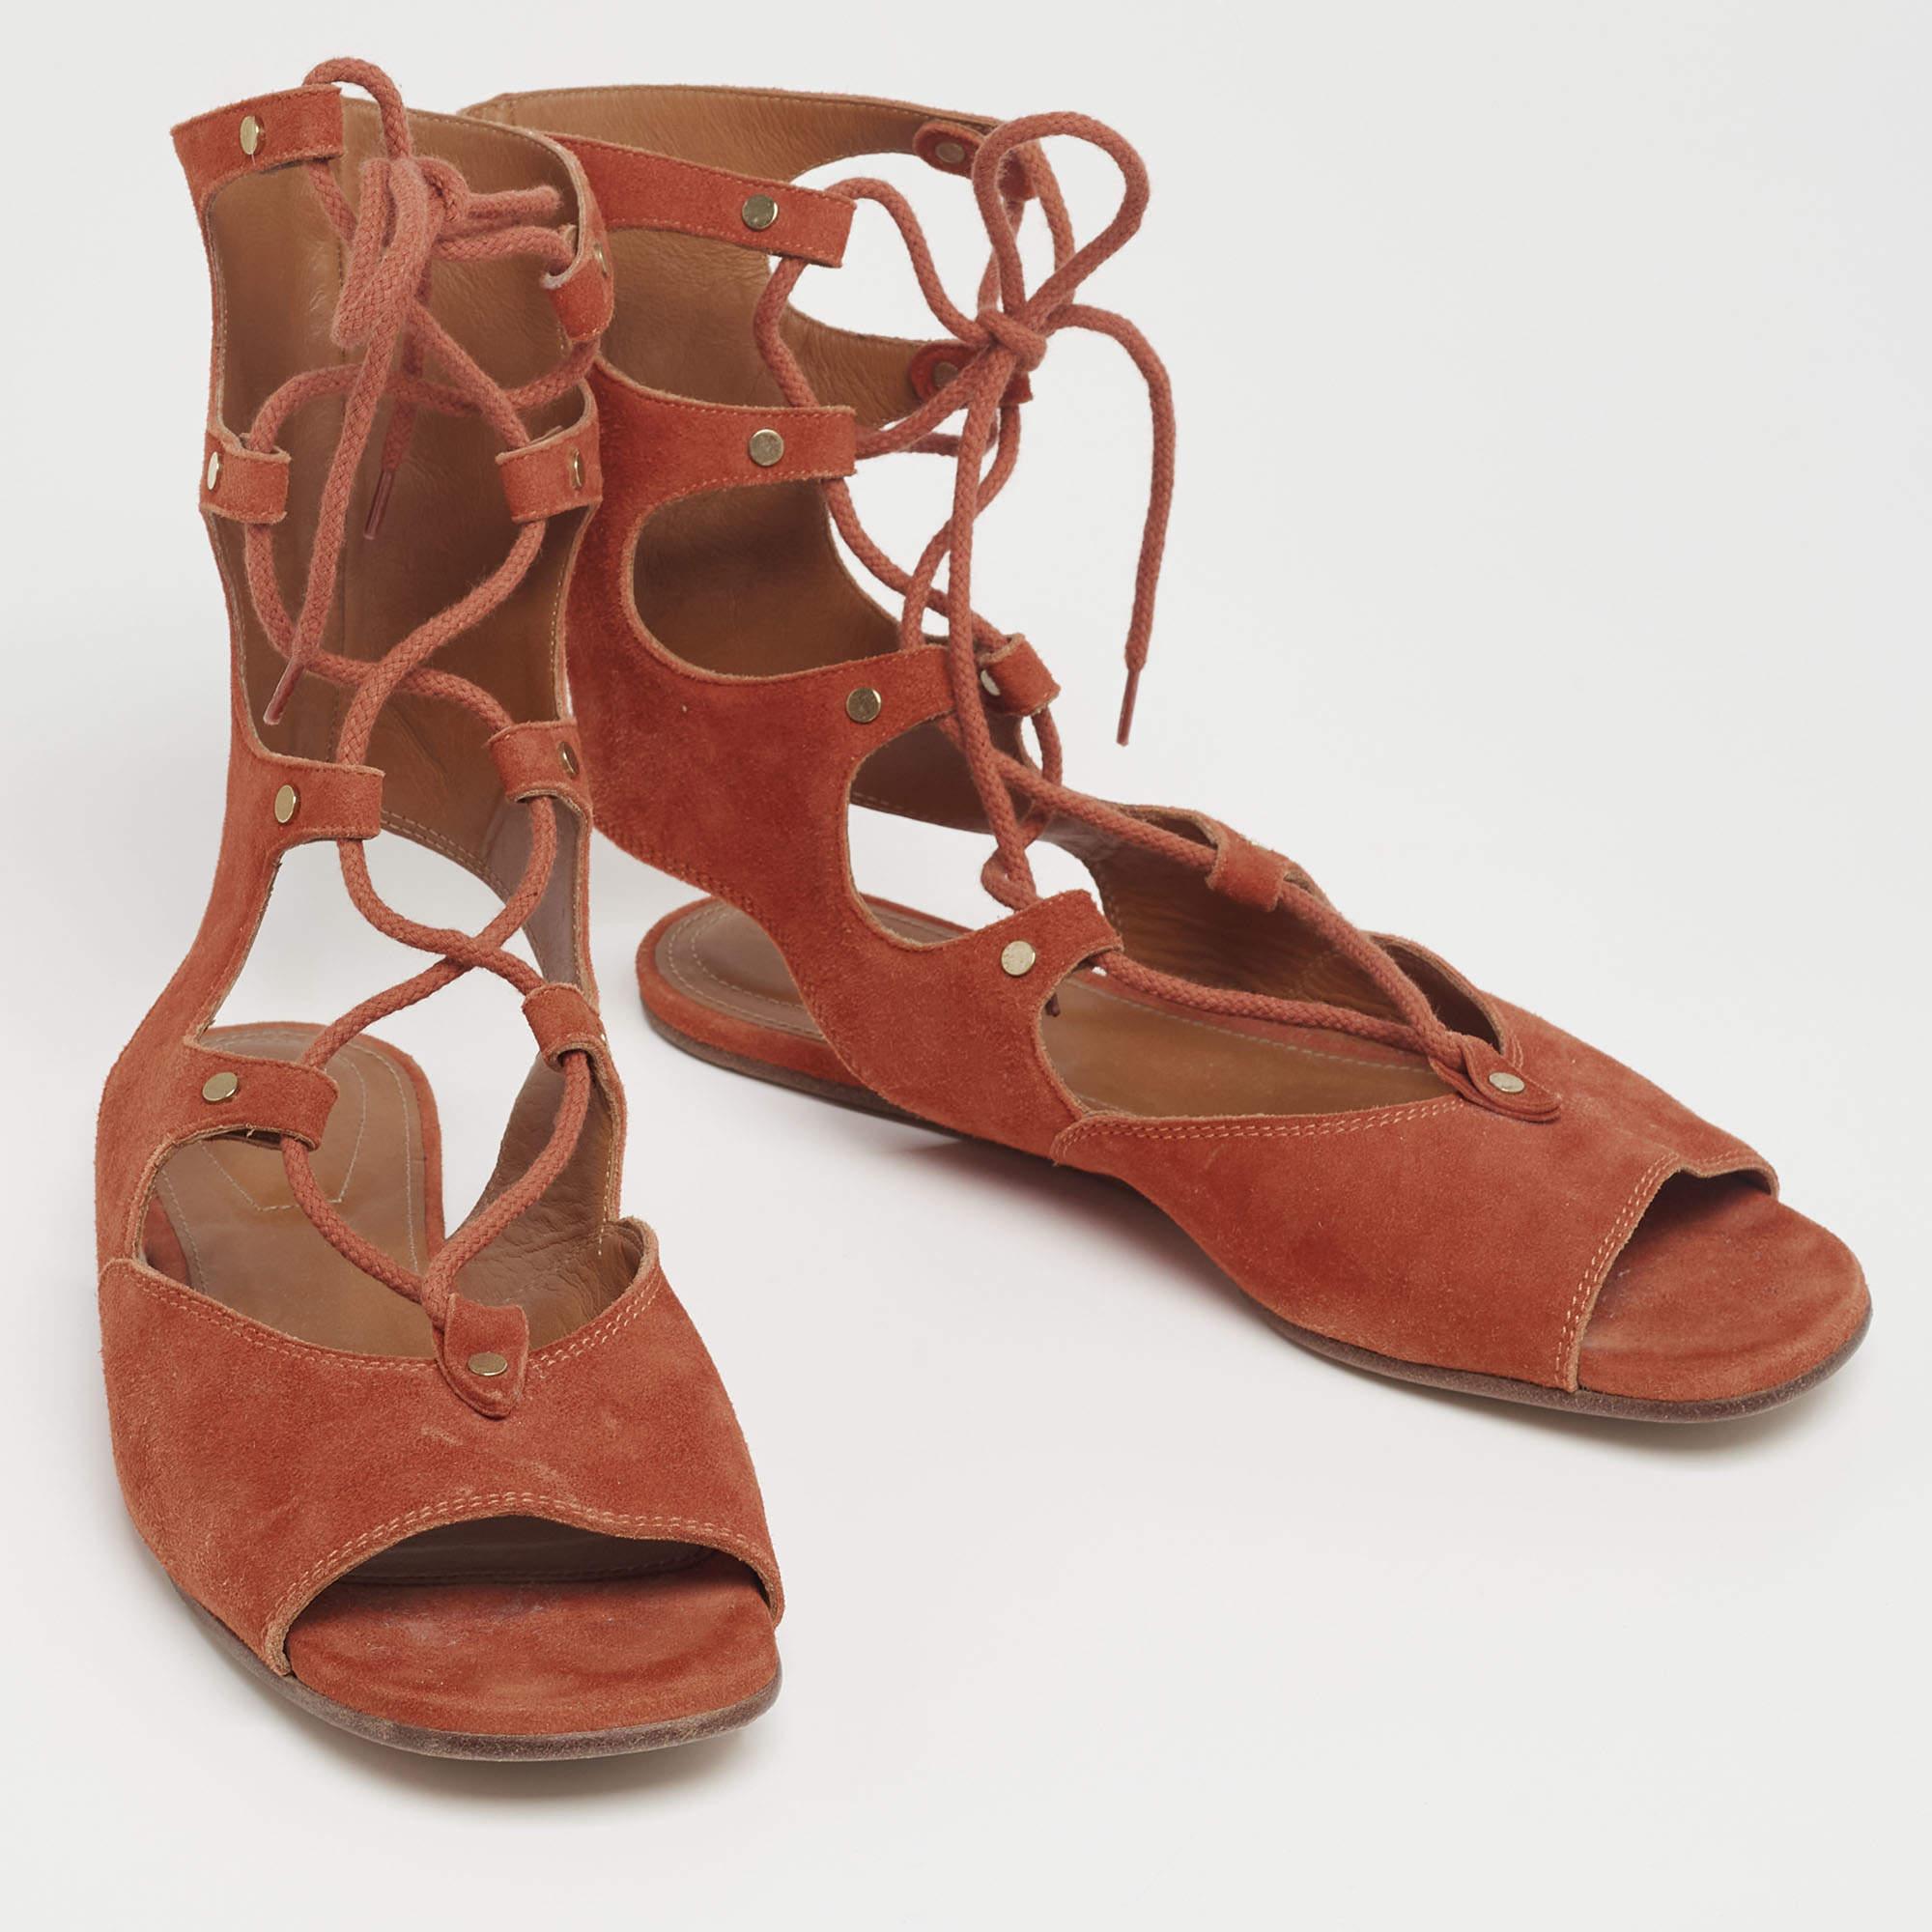 Women's Chloe Rust Suede Gladiator Flat Sandals Size 38